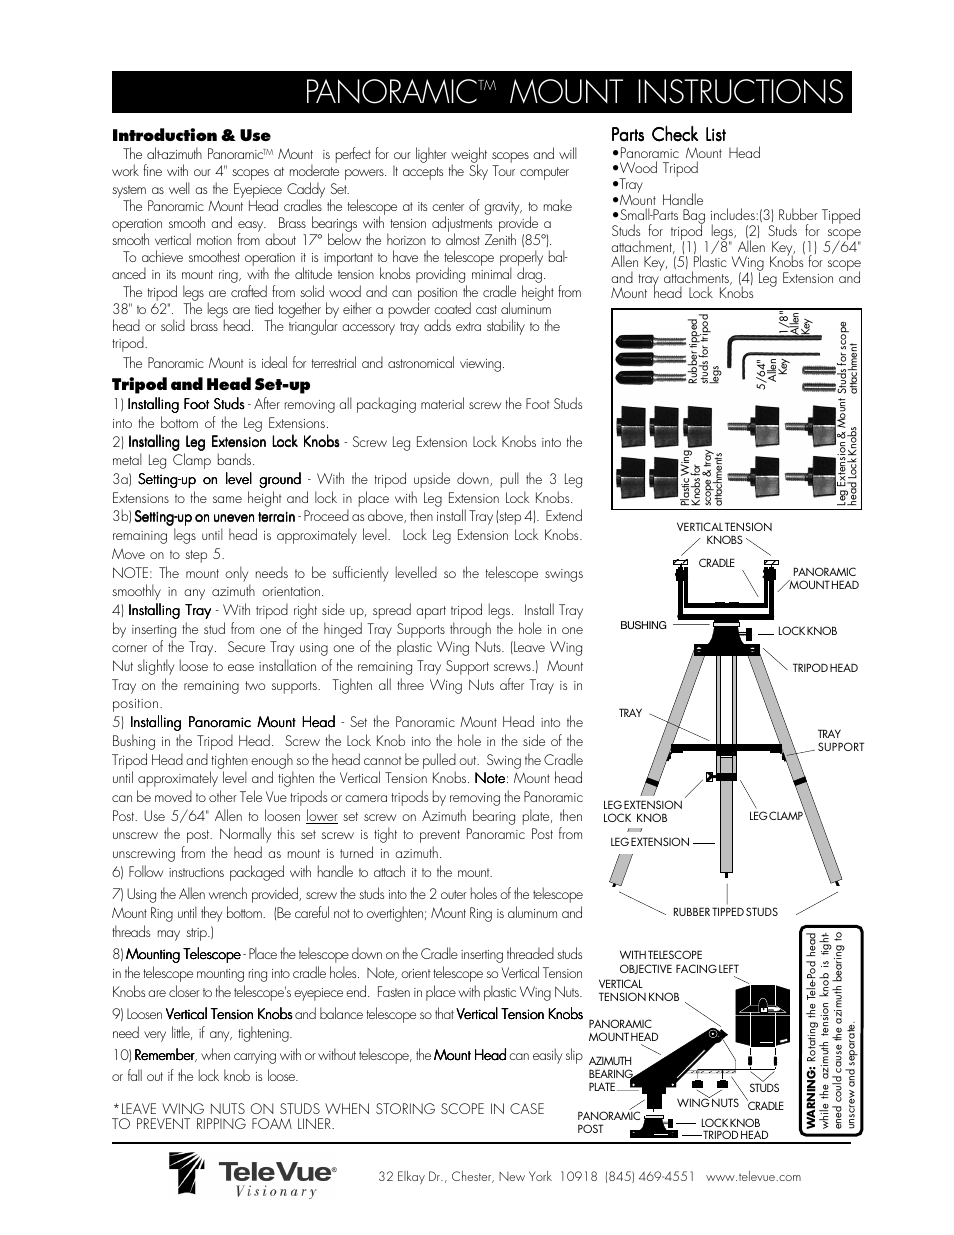 Tele Vue Panoramic Mount User Manual | 1 page